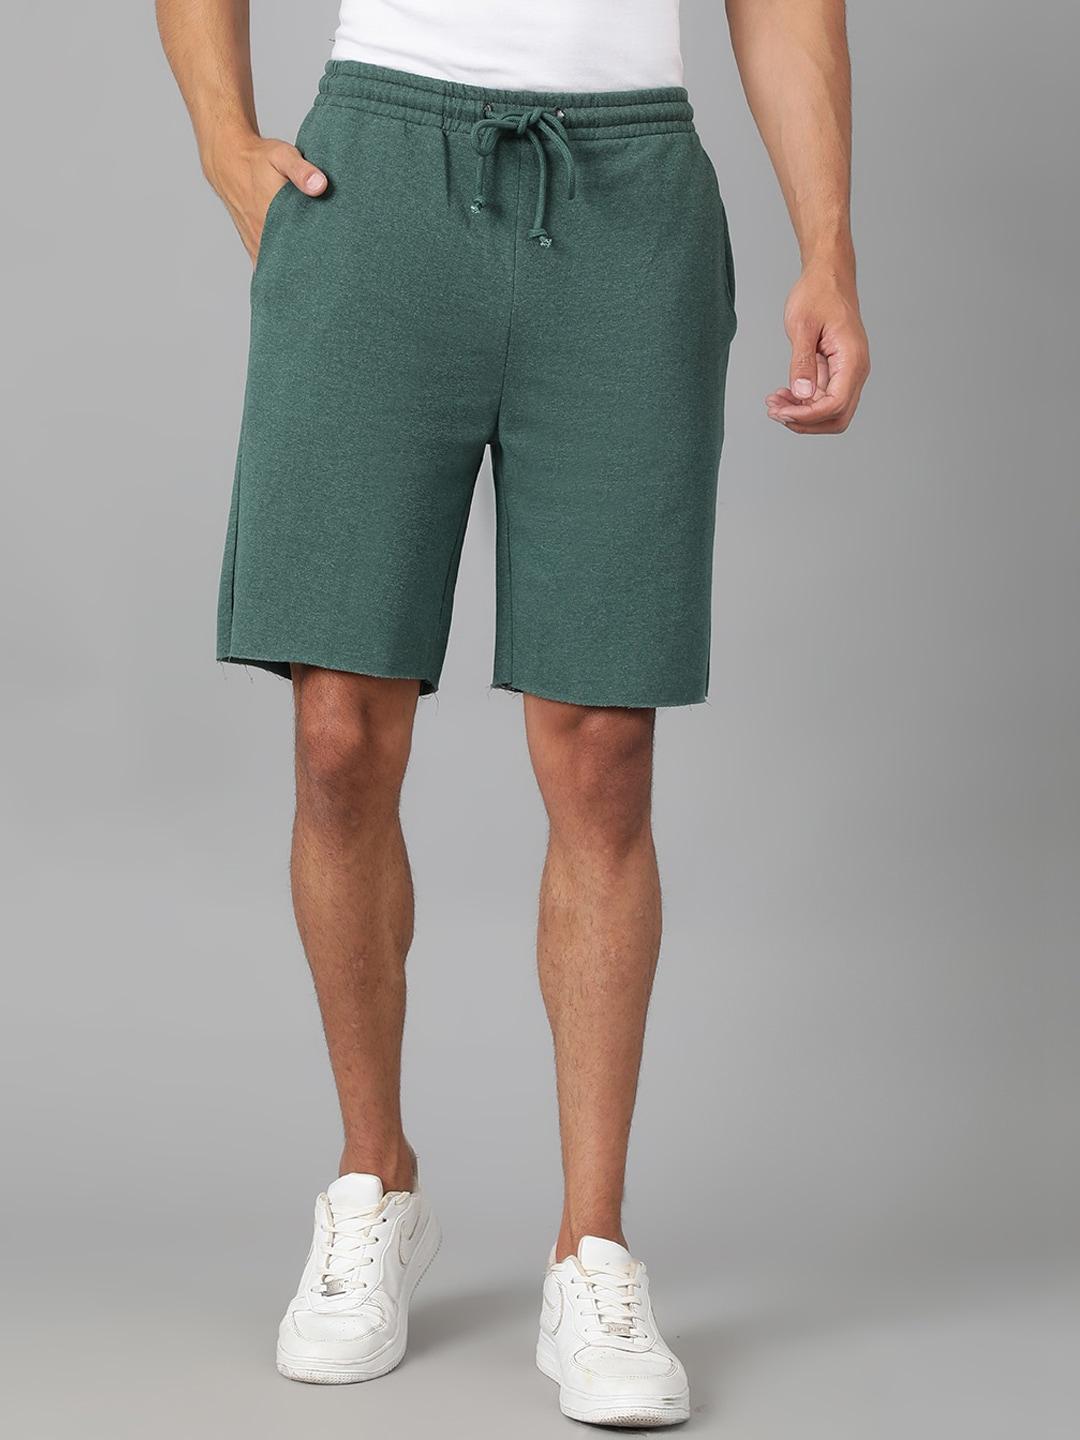 kotty-men-green-low-rise-running-shorts